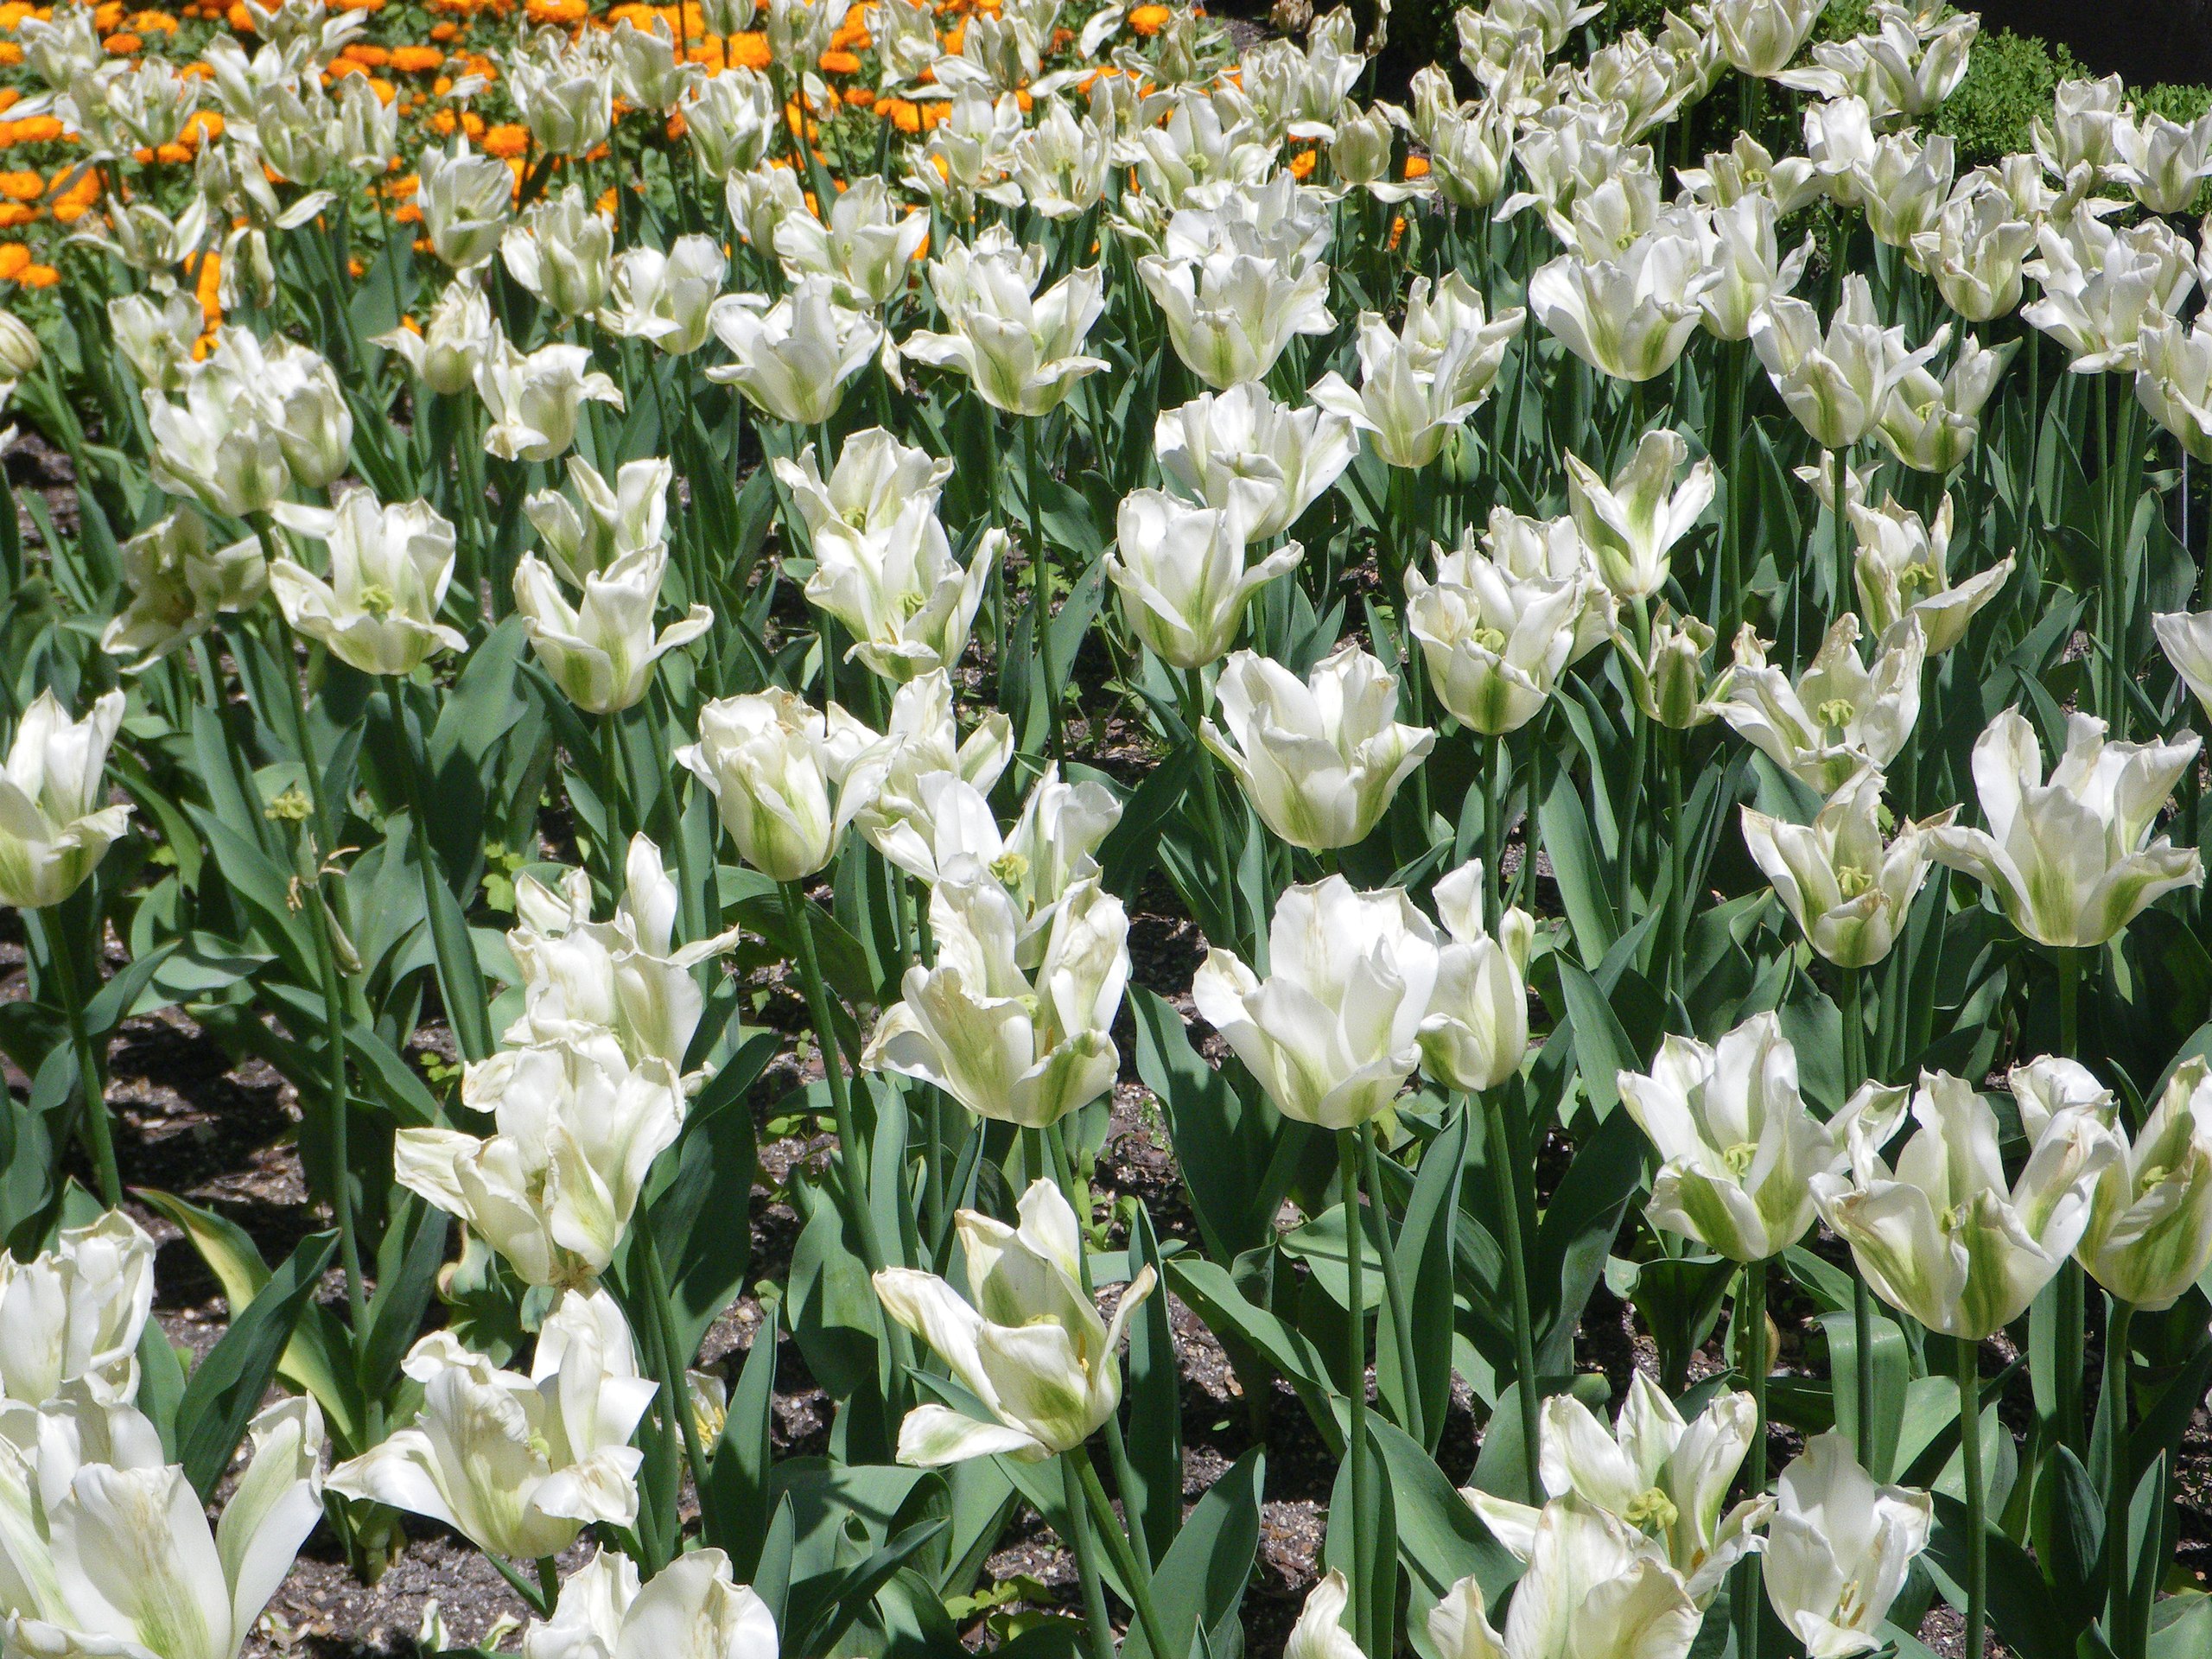 File:Spring Green.jpg - Wikipedia